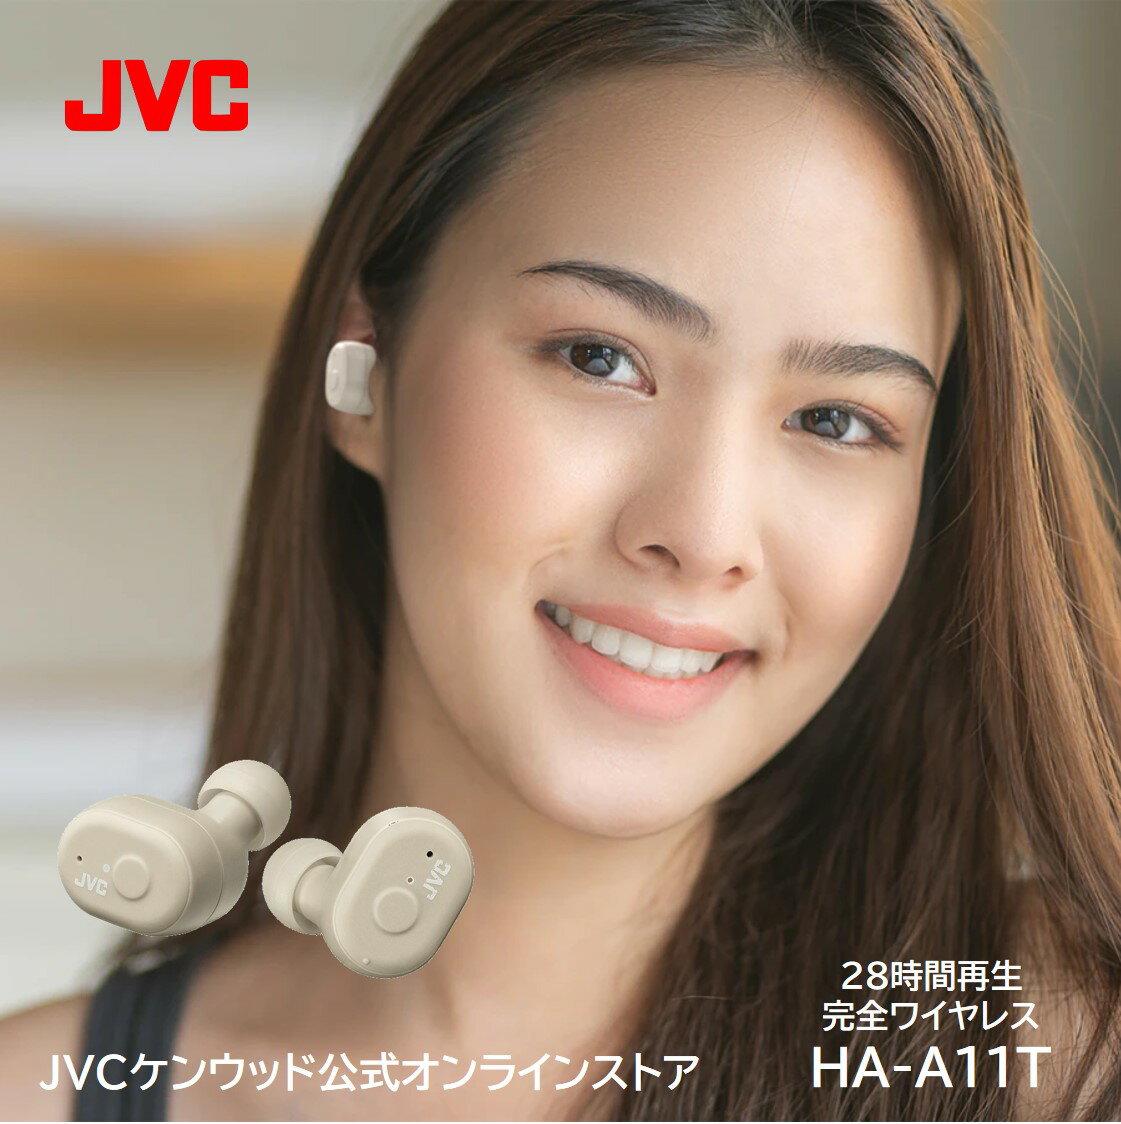 JVC 小型 軽量 完全ワイヤレス イヤホン HA-A11T 長時間再生 ブルートゥース5.1 防水 bluetooth5.1 両耳 片耳 左右分離型 クイック充電 急速充電 JVC ケンウッド iphone android ワイヤレス イヤホン マイク付き 通話可能 マイク内蔵 テレワーク 通勤 通学 充電ケース